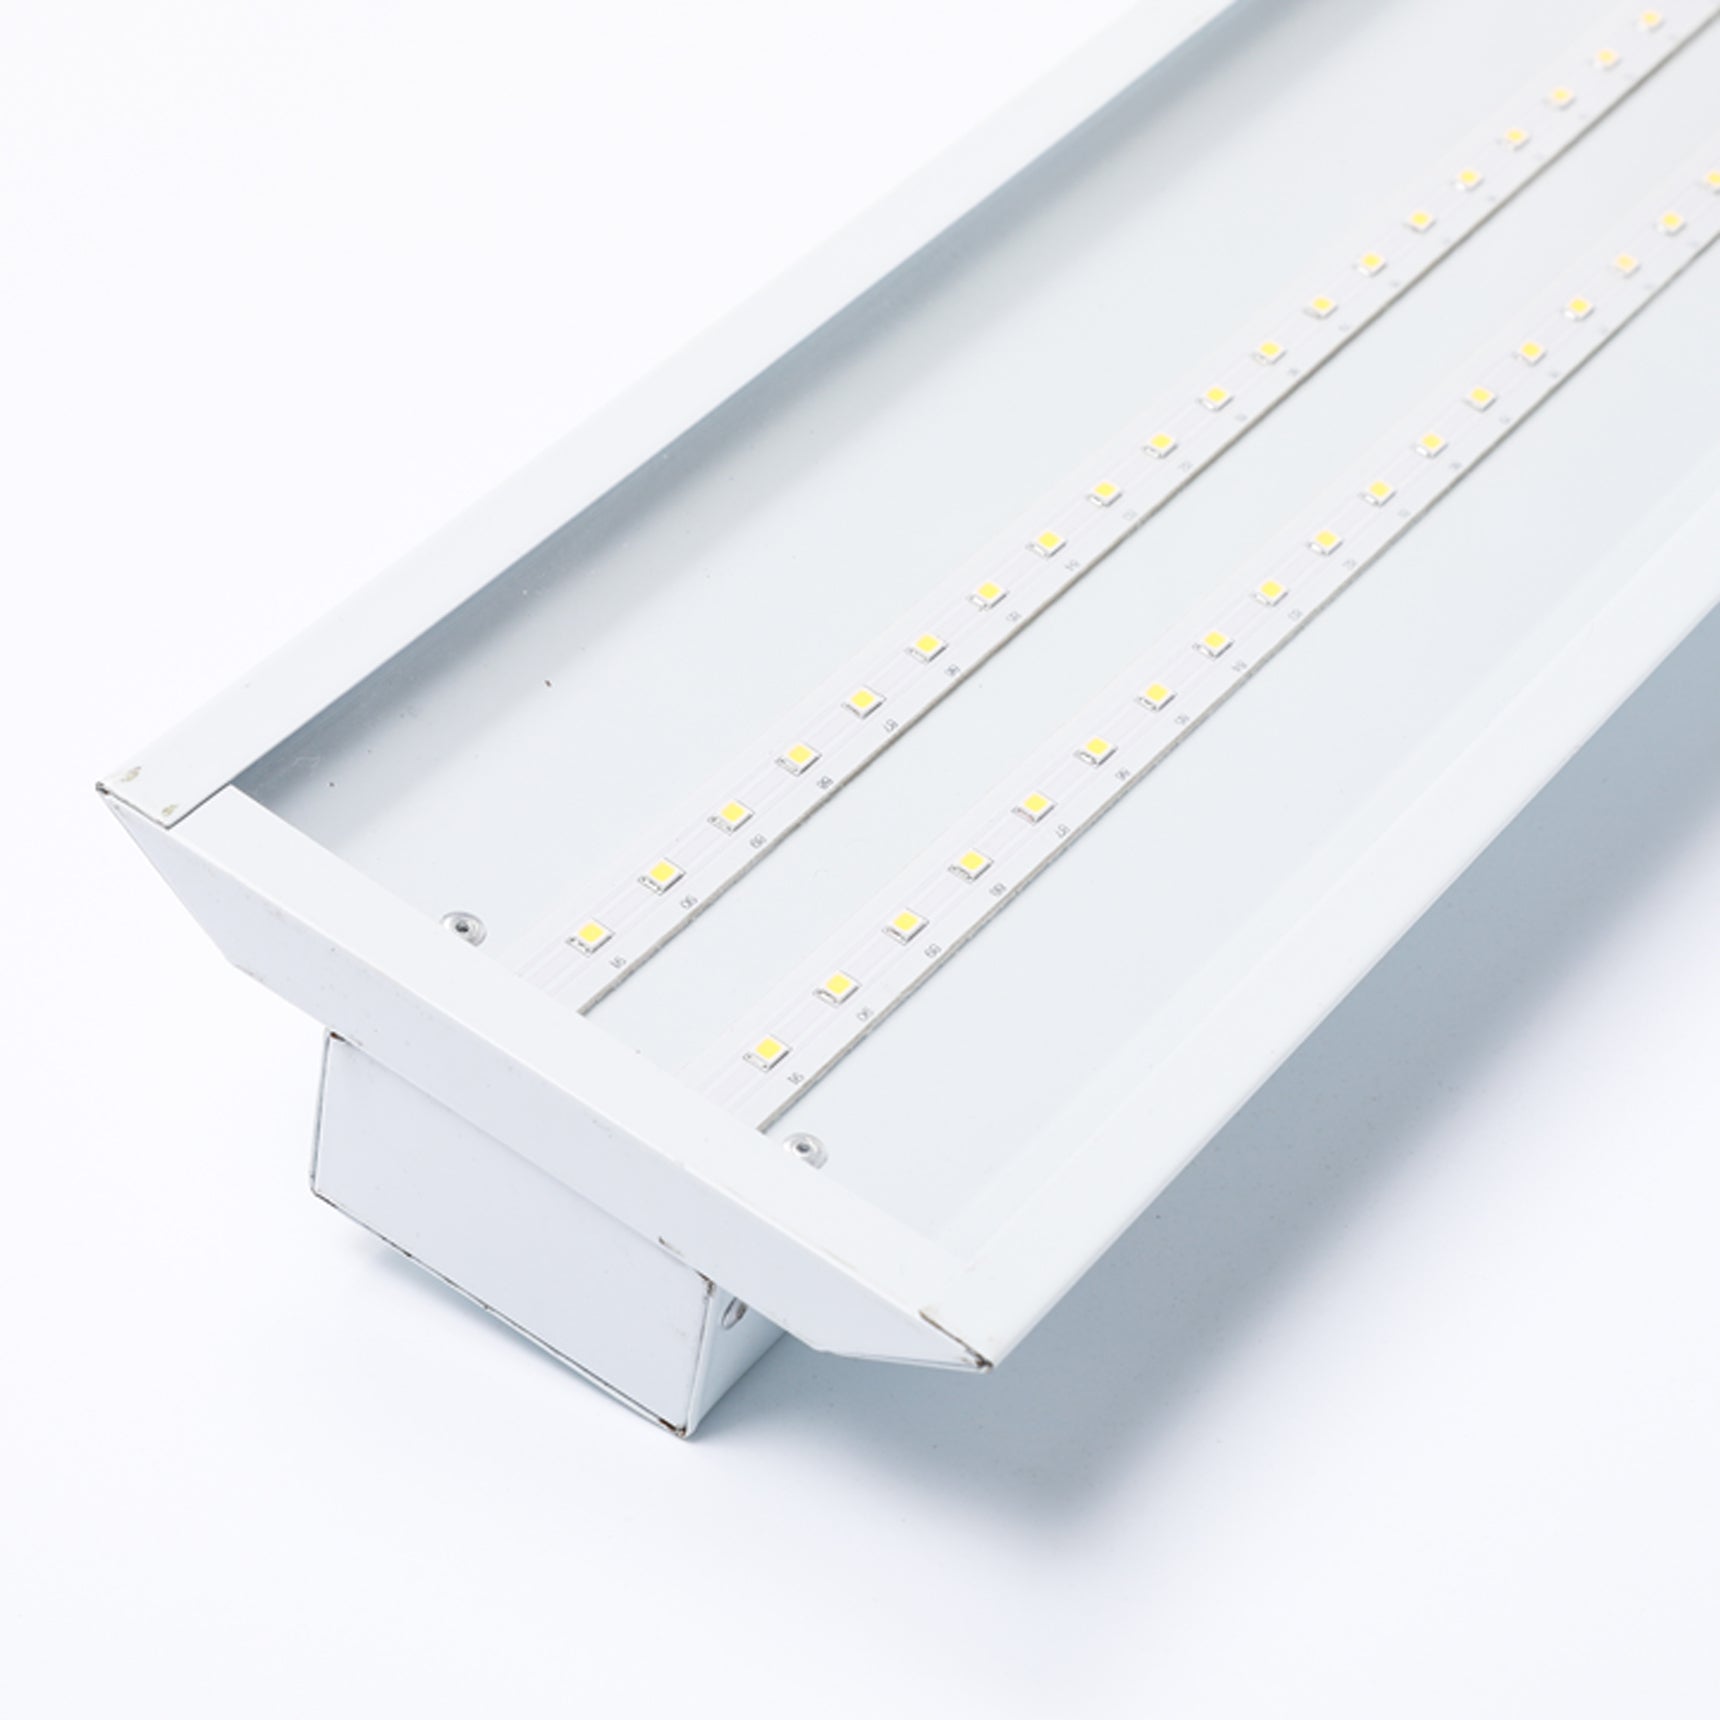 NorthLux™ 95 CRI T5 LED Linear Light Fixture – Waveform Lighting